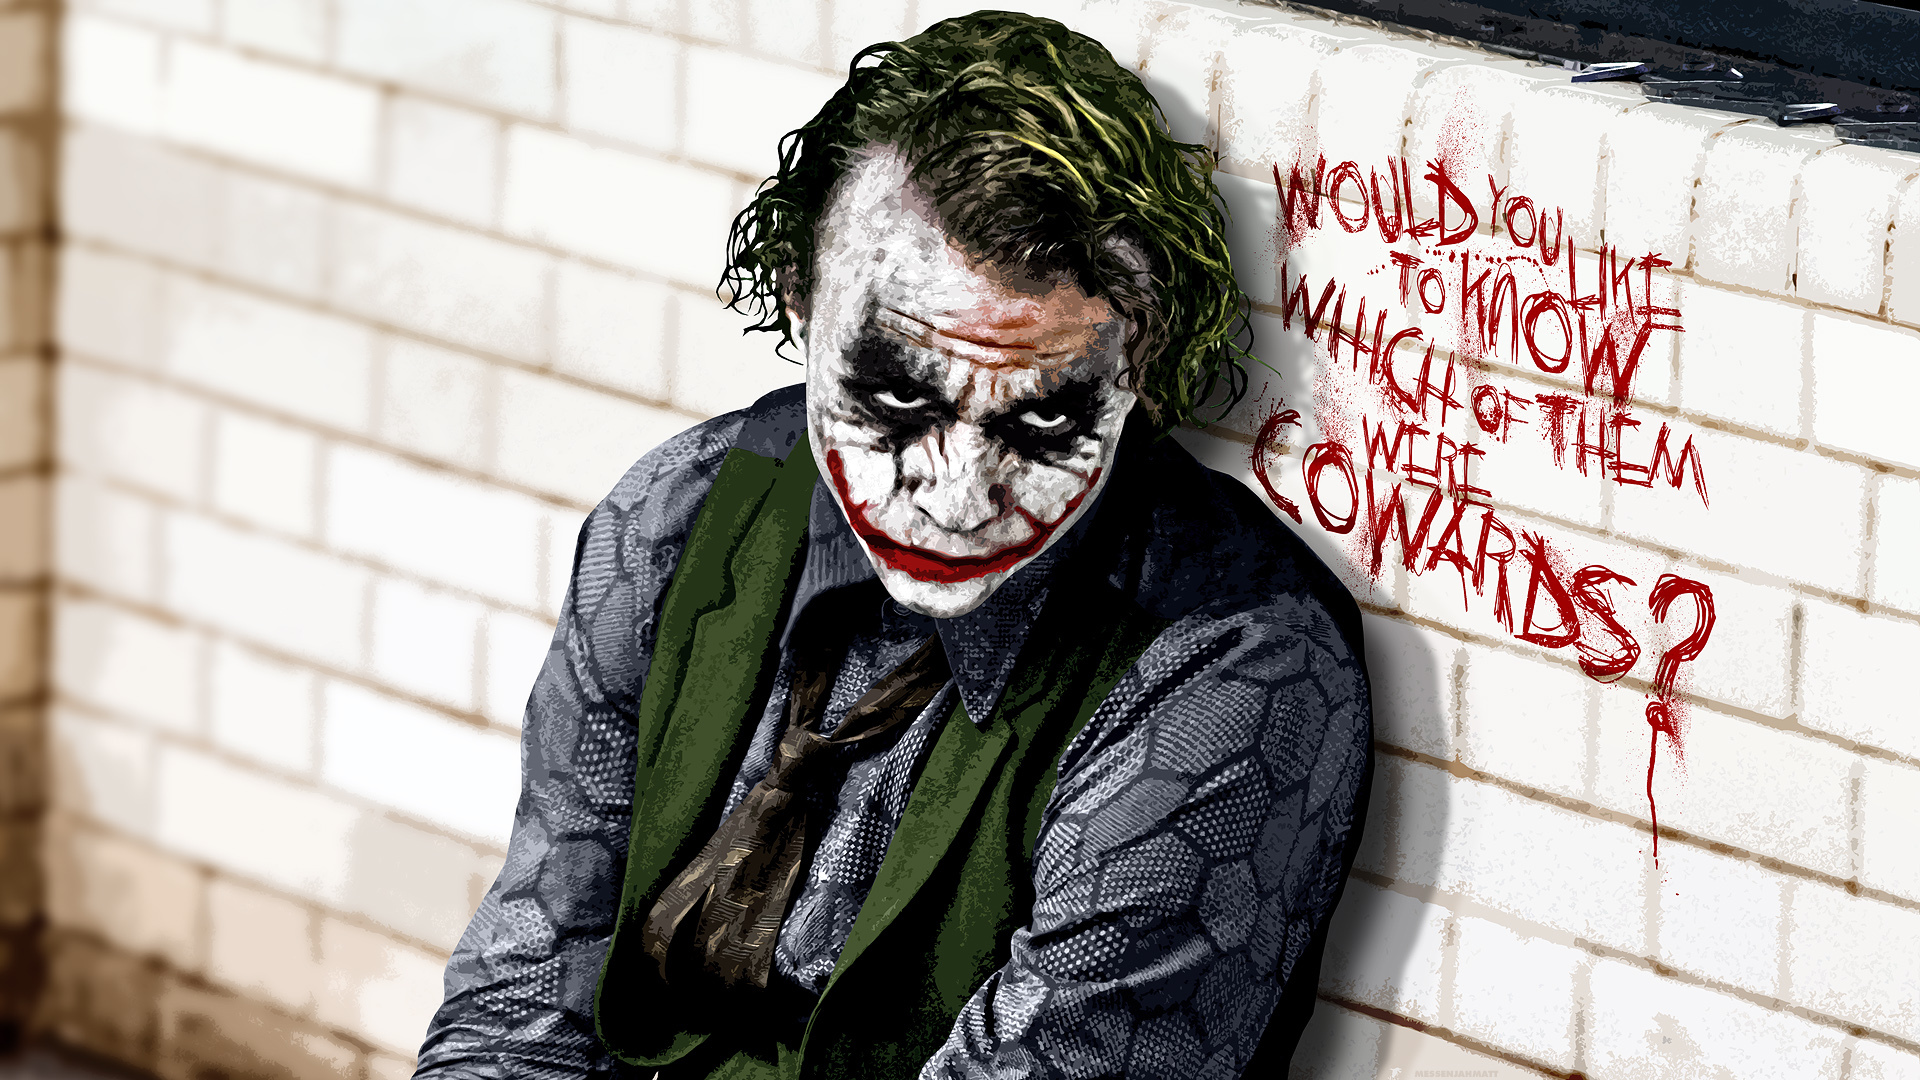  Stylish Joker Wallpapers 4k Ultra HD Wallpaper Images Free Download